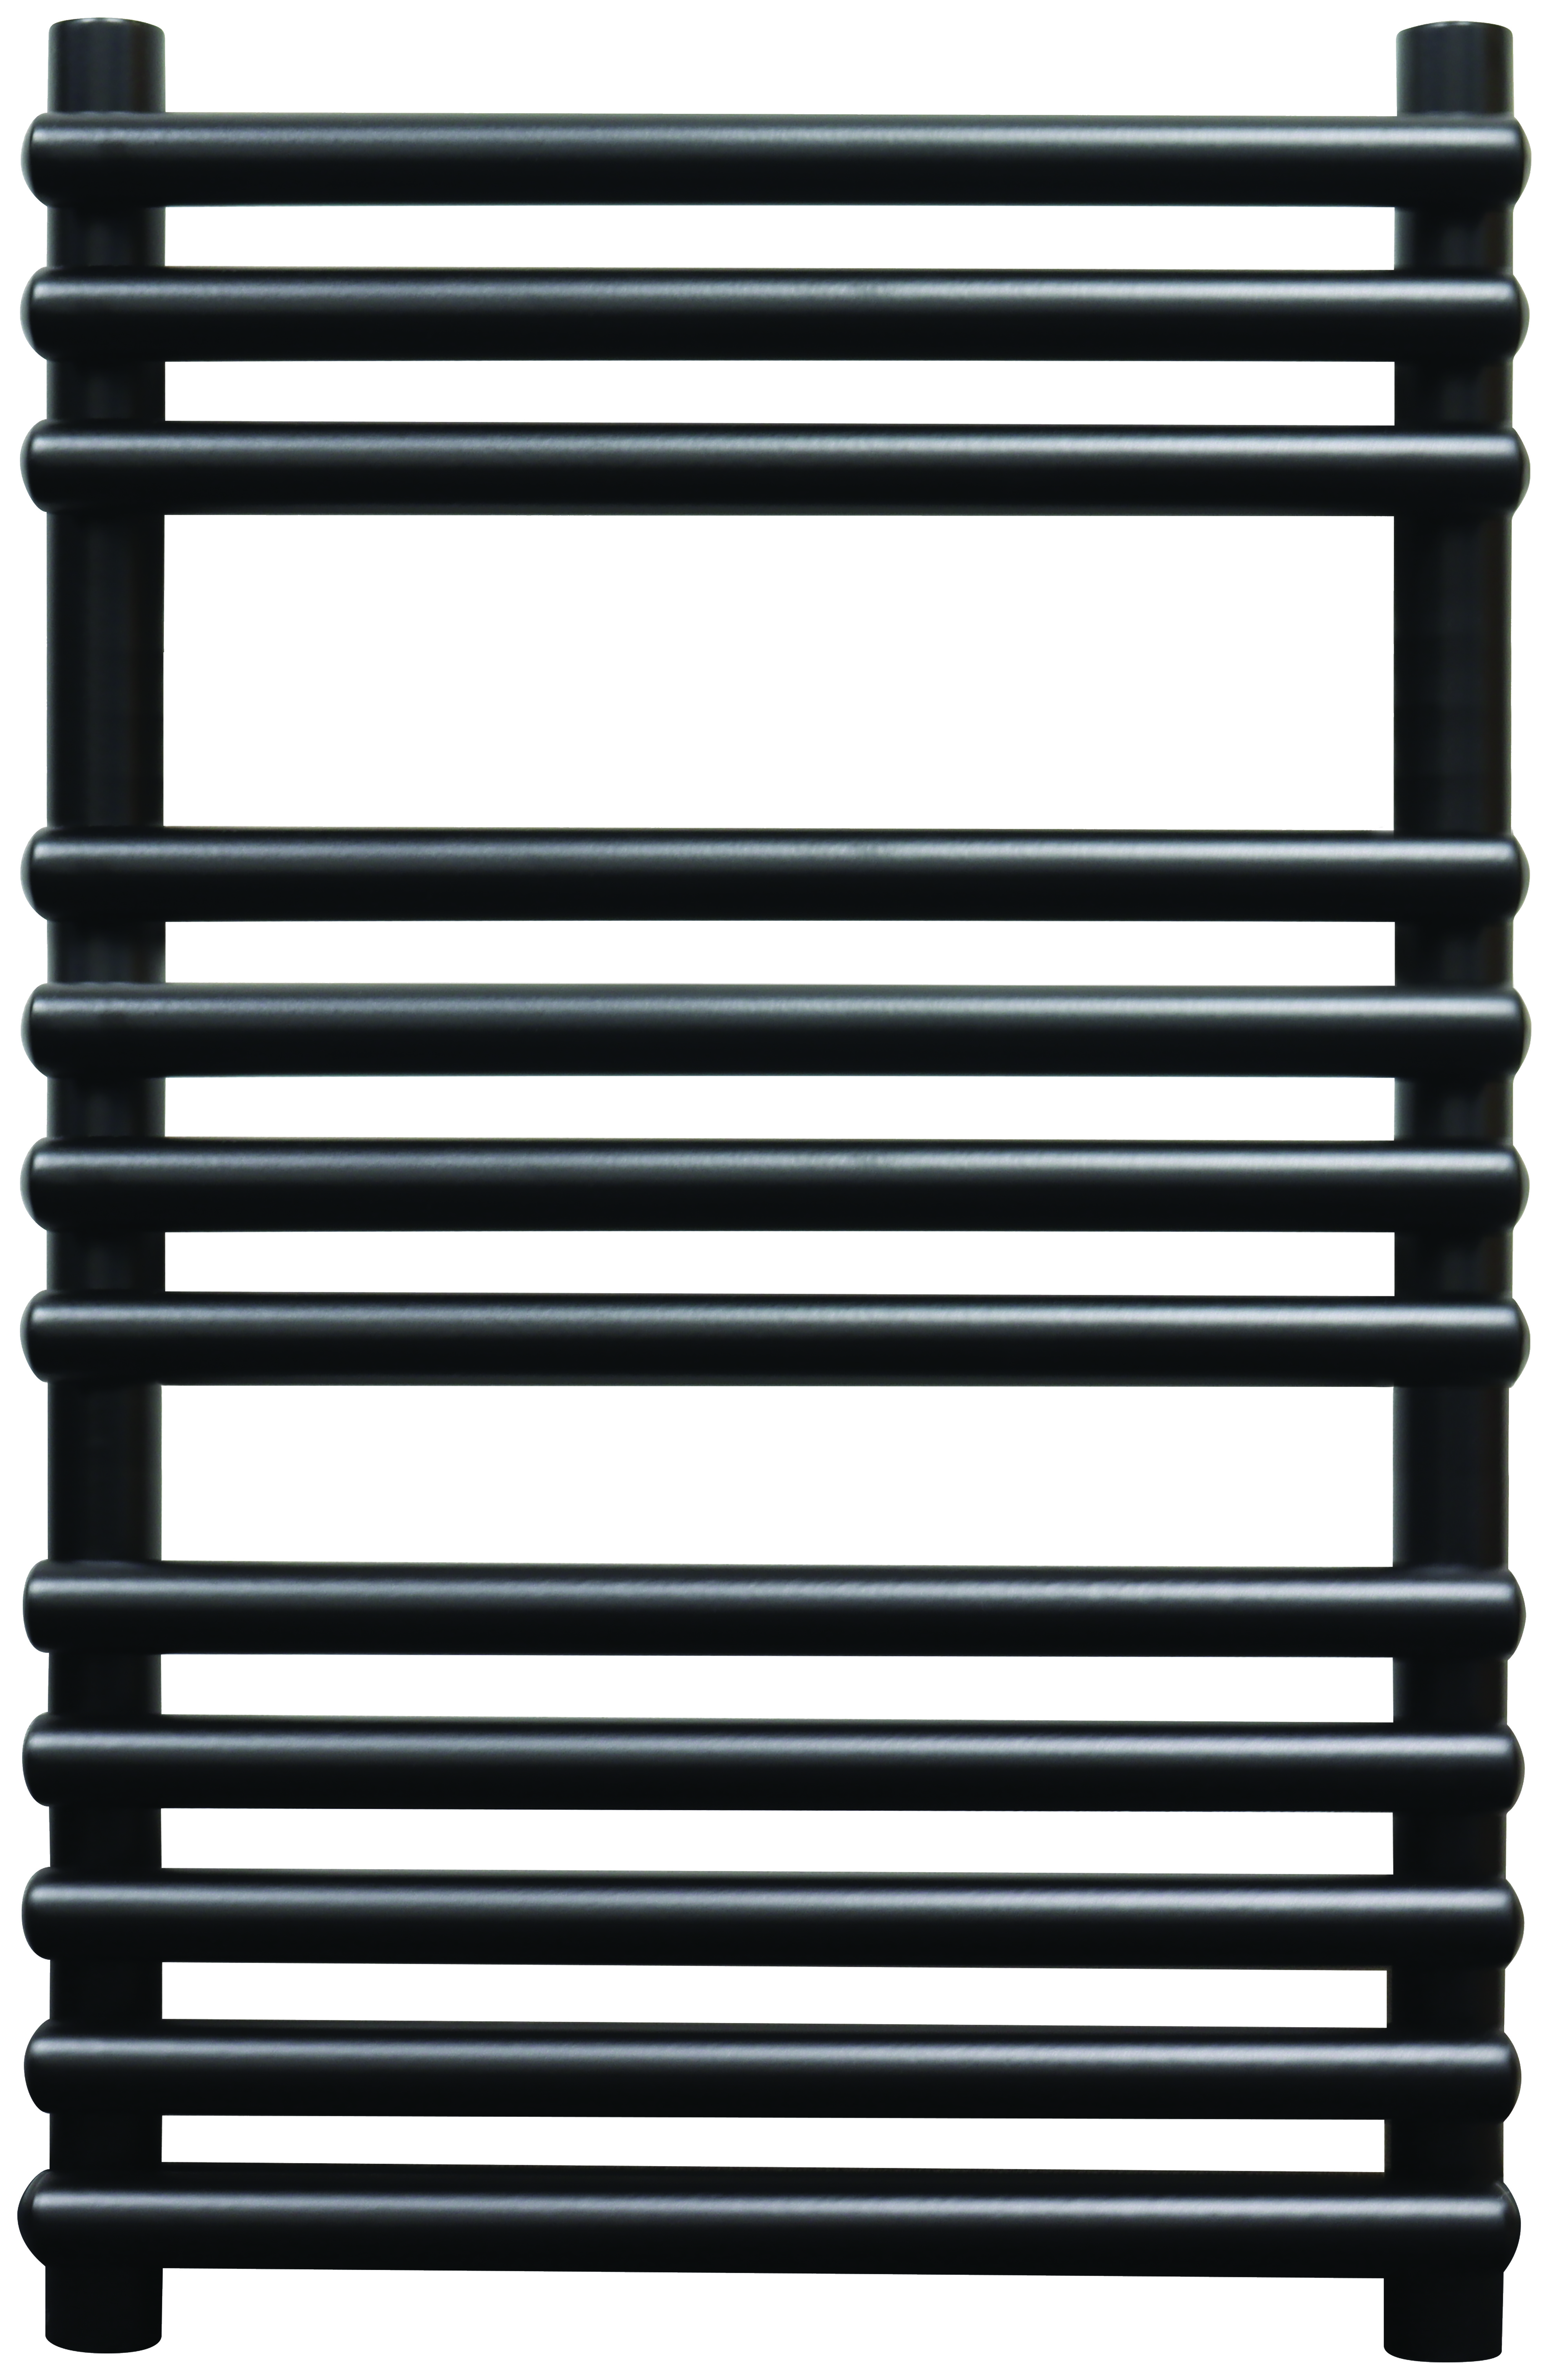 Image of Towelrads Double Iridio Matt Black Towel Radiator - 1500 x 500mm